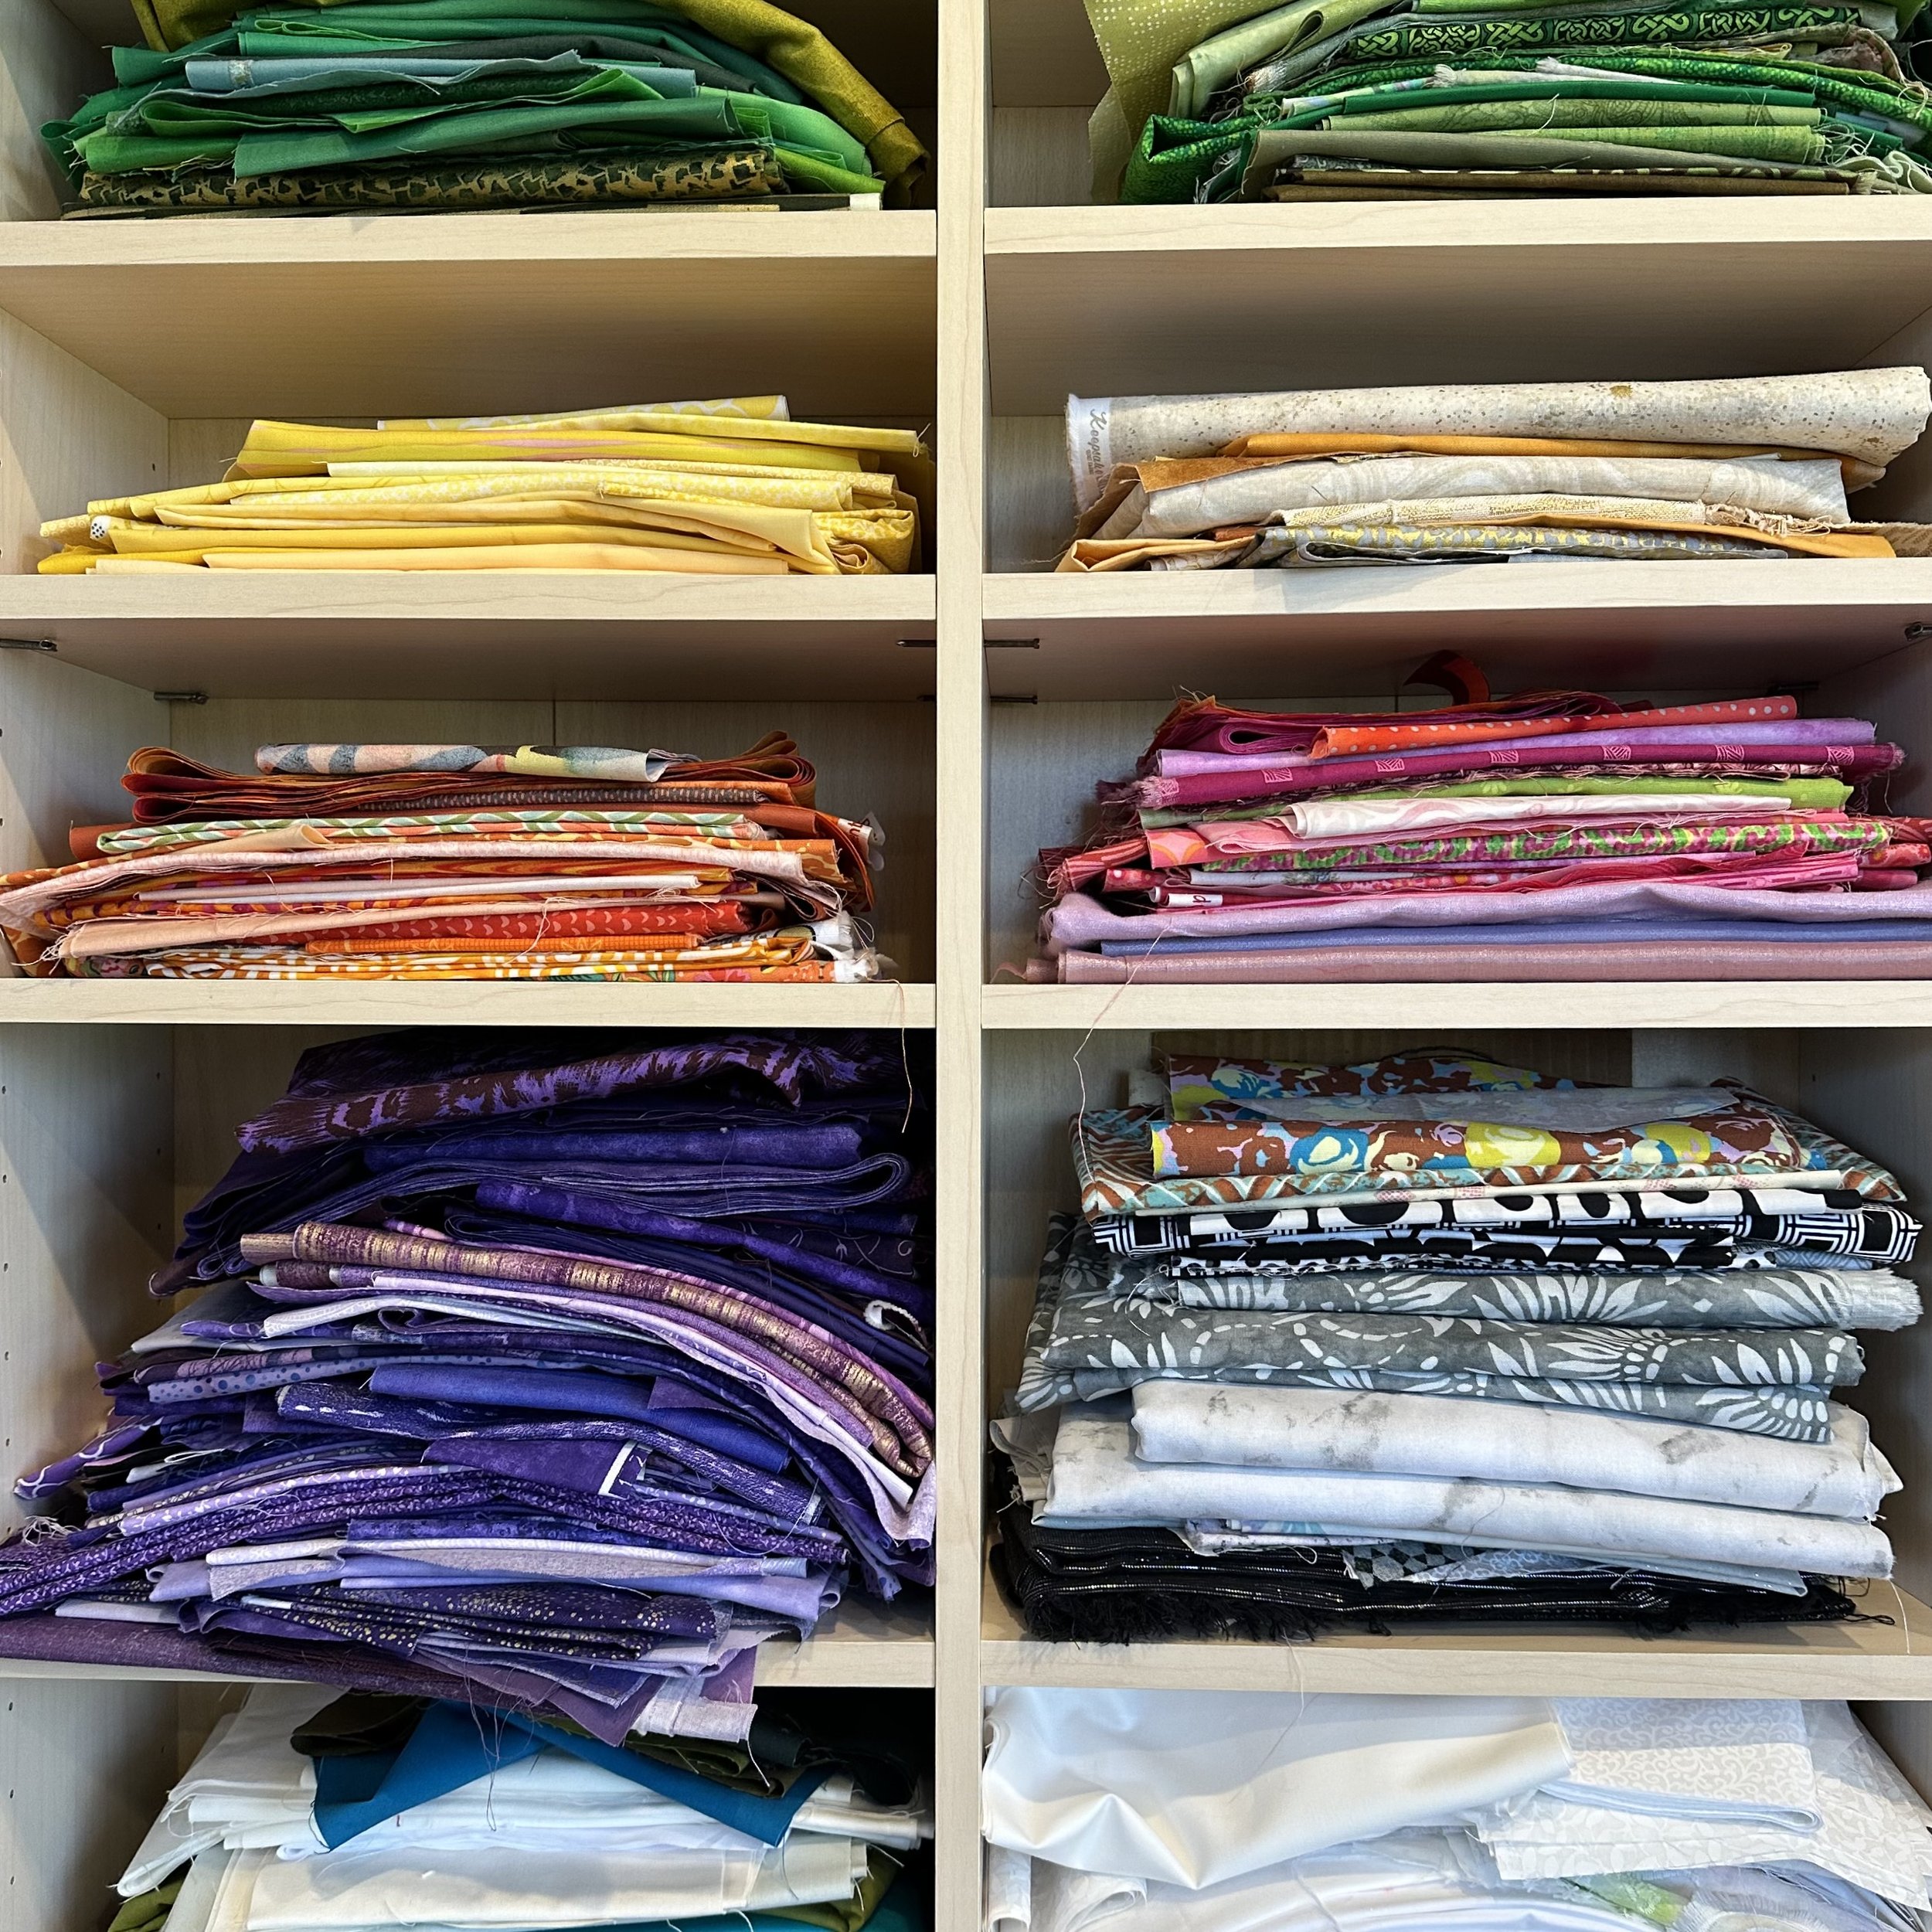 Rainbow organization of fabric